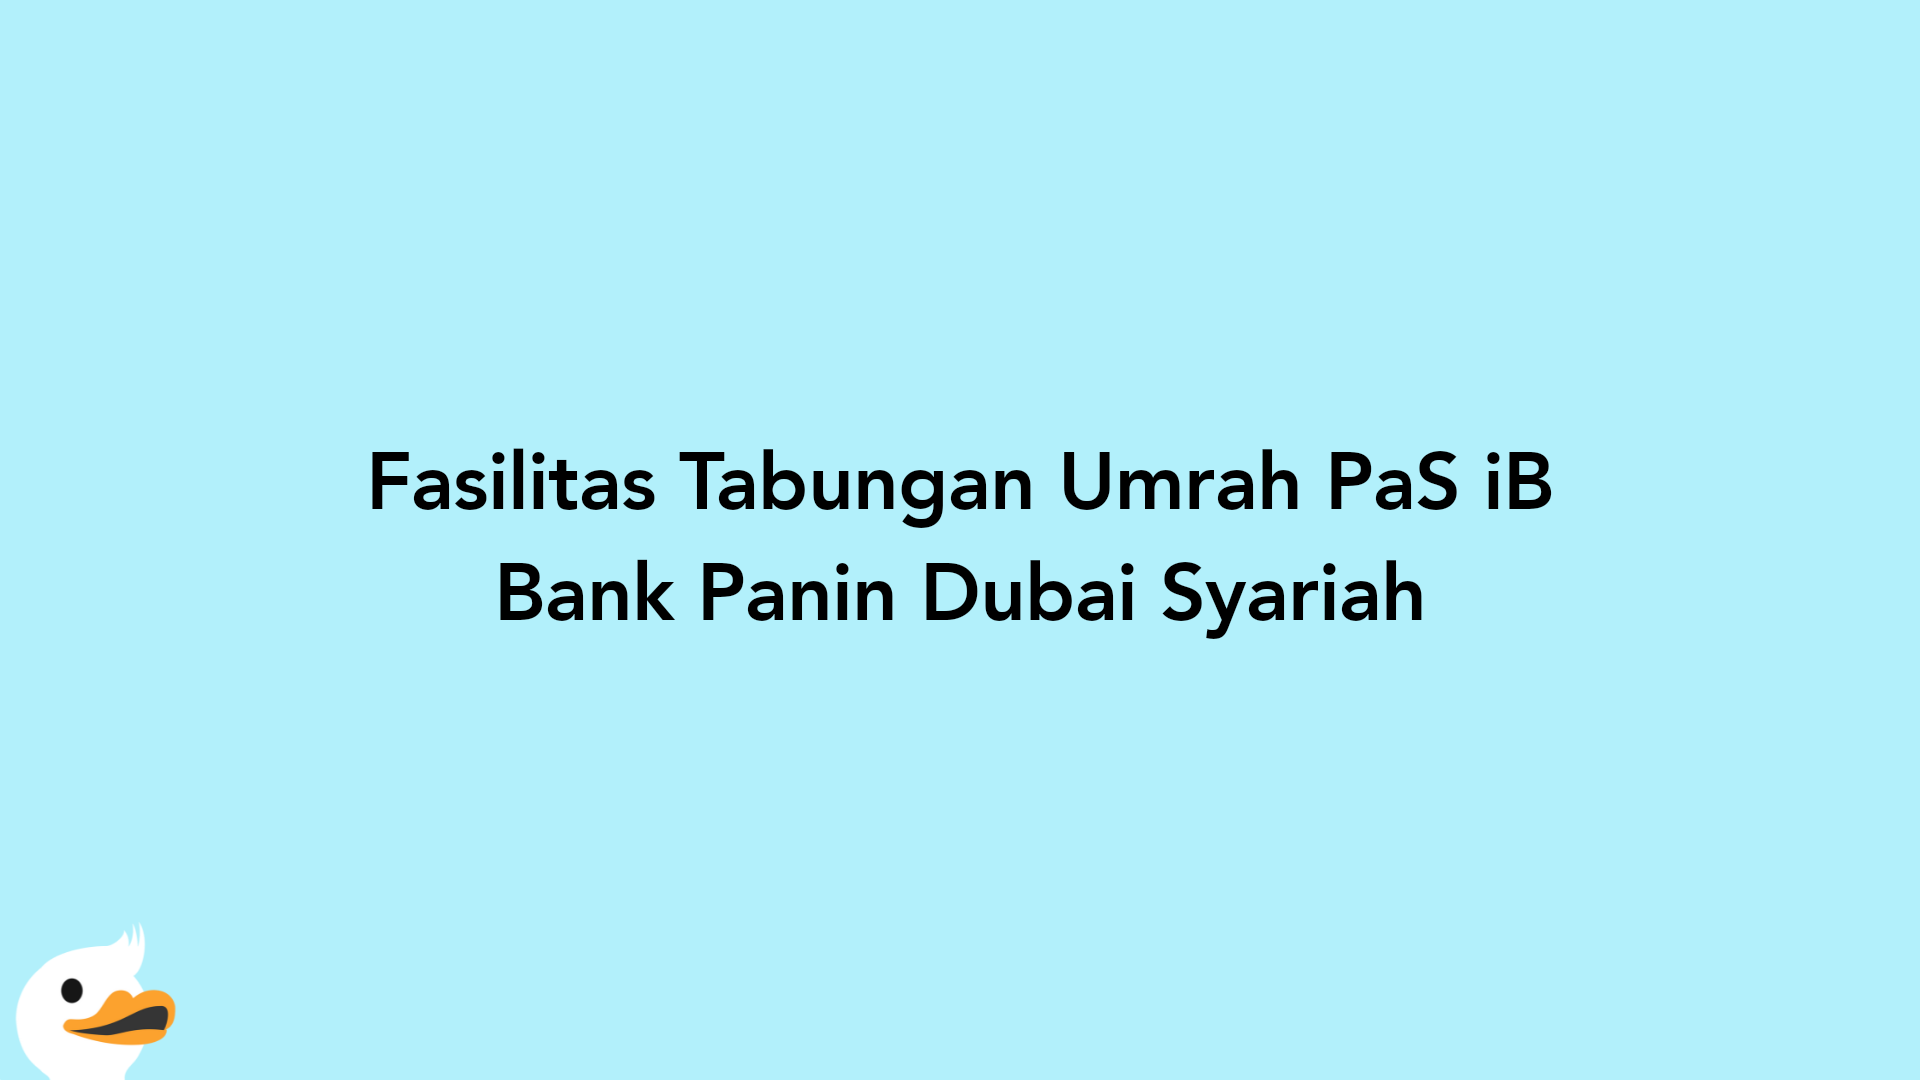 Fasilitas Tabungan Umrah PaS iB Bank Panin Dubai Syariah